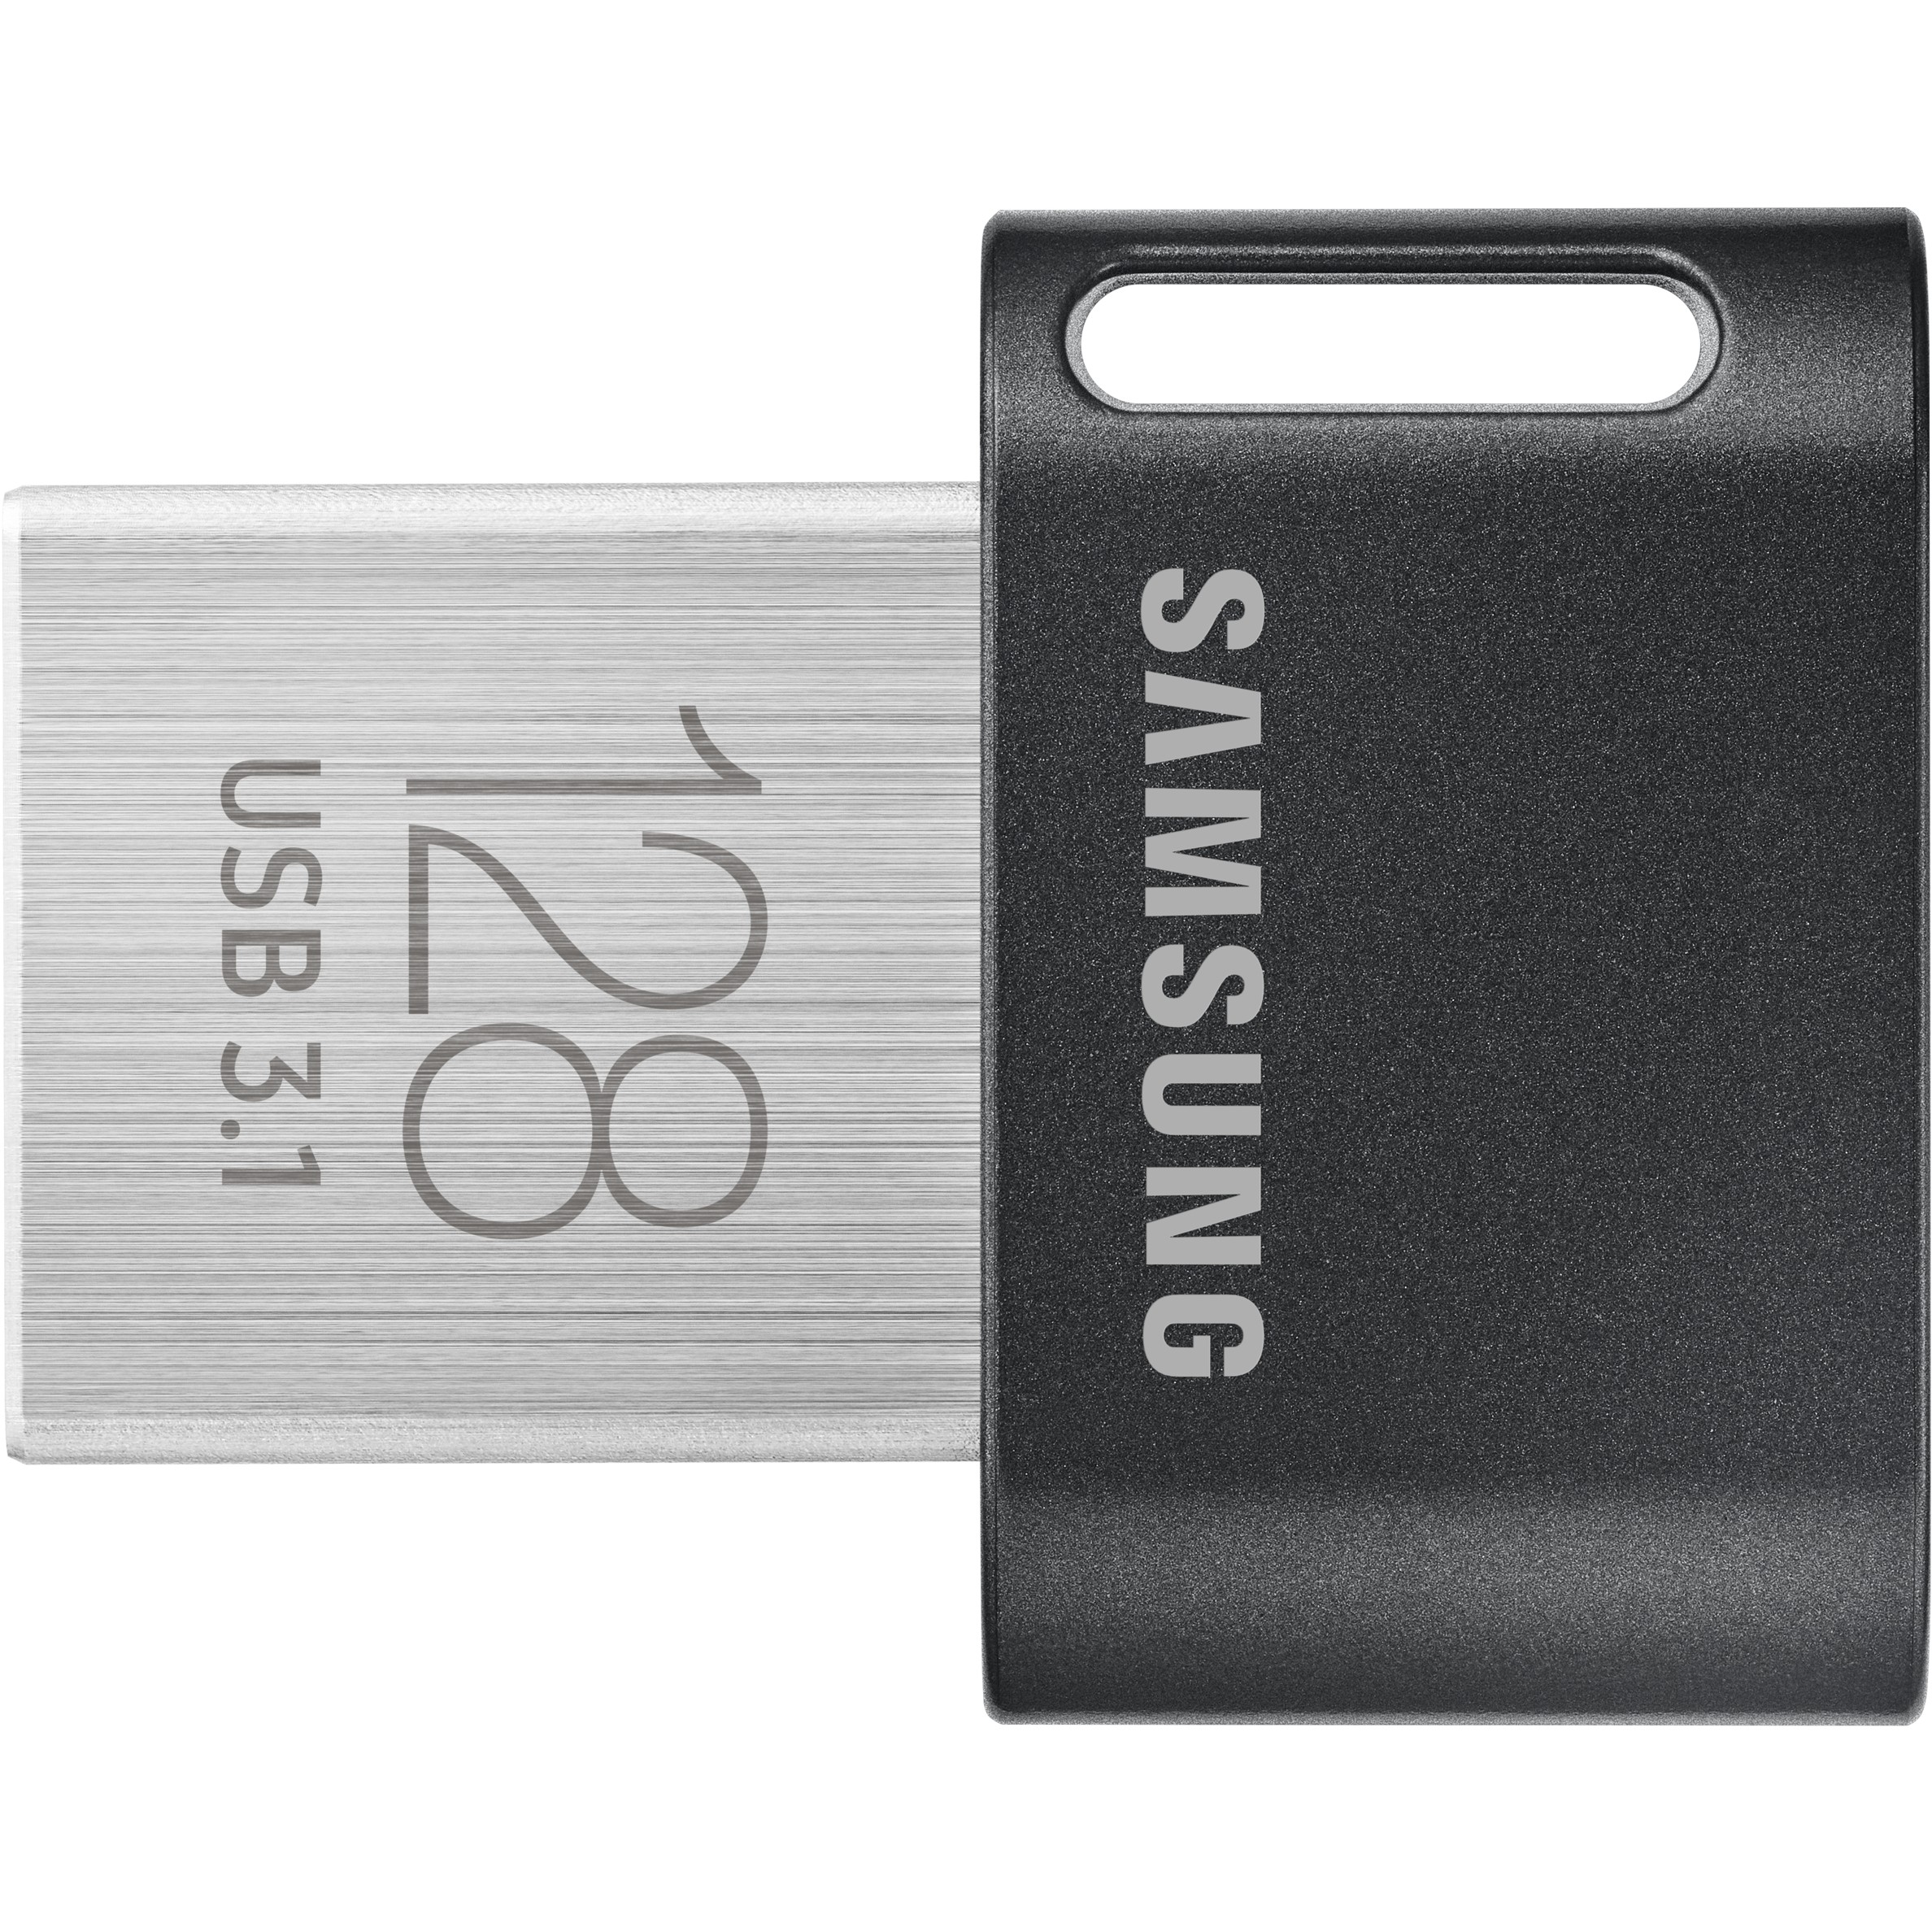 SAMSUNG MUF-128AB/APC, USB-Stick, Samsung MUF-128AB USB  (BILD1)